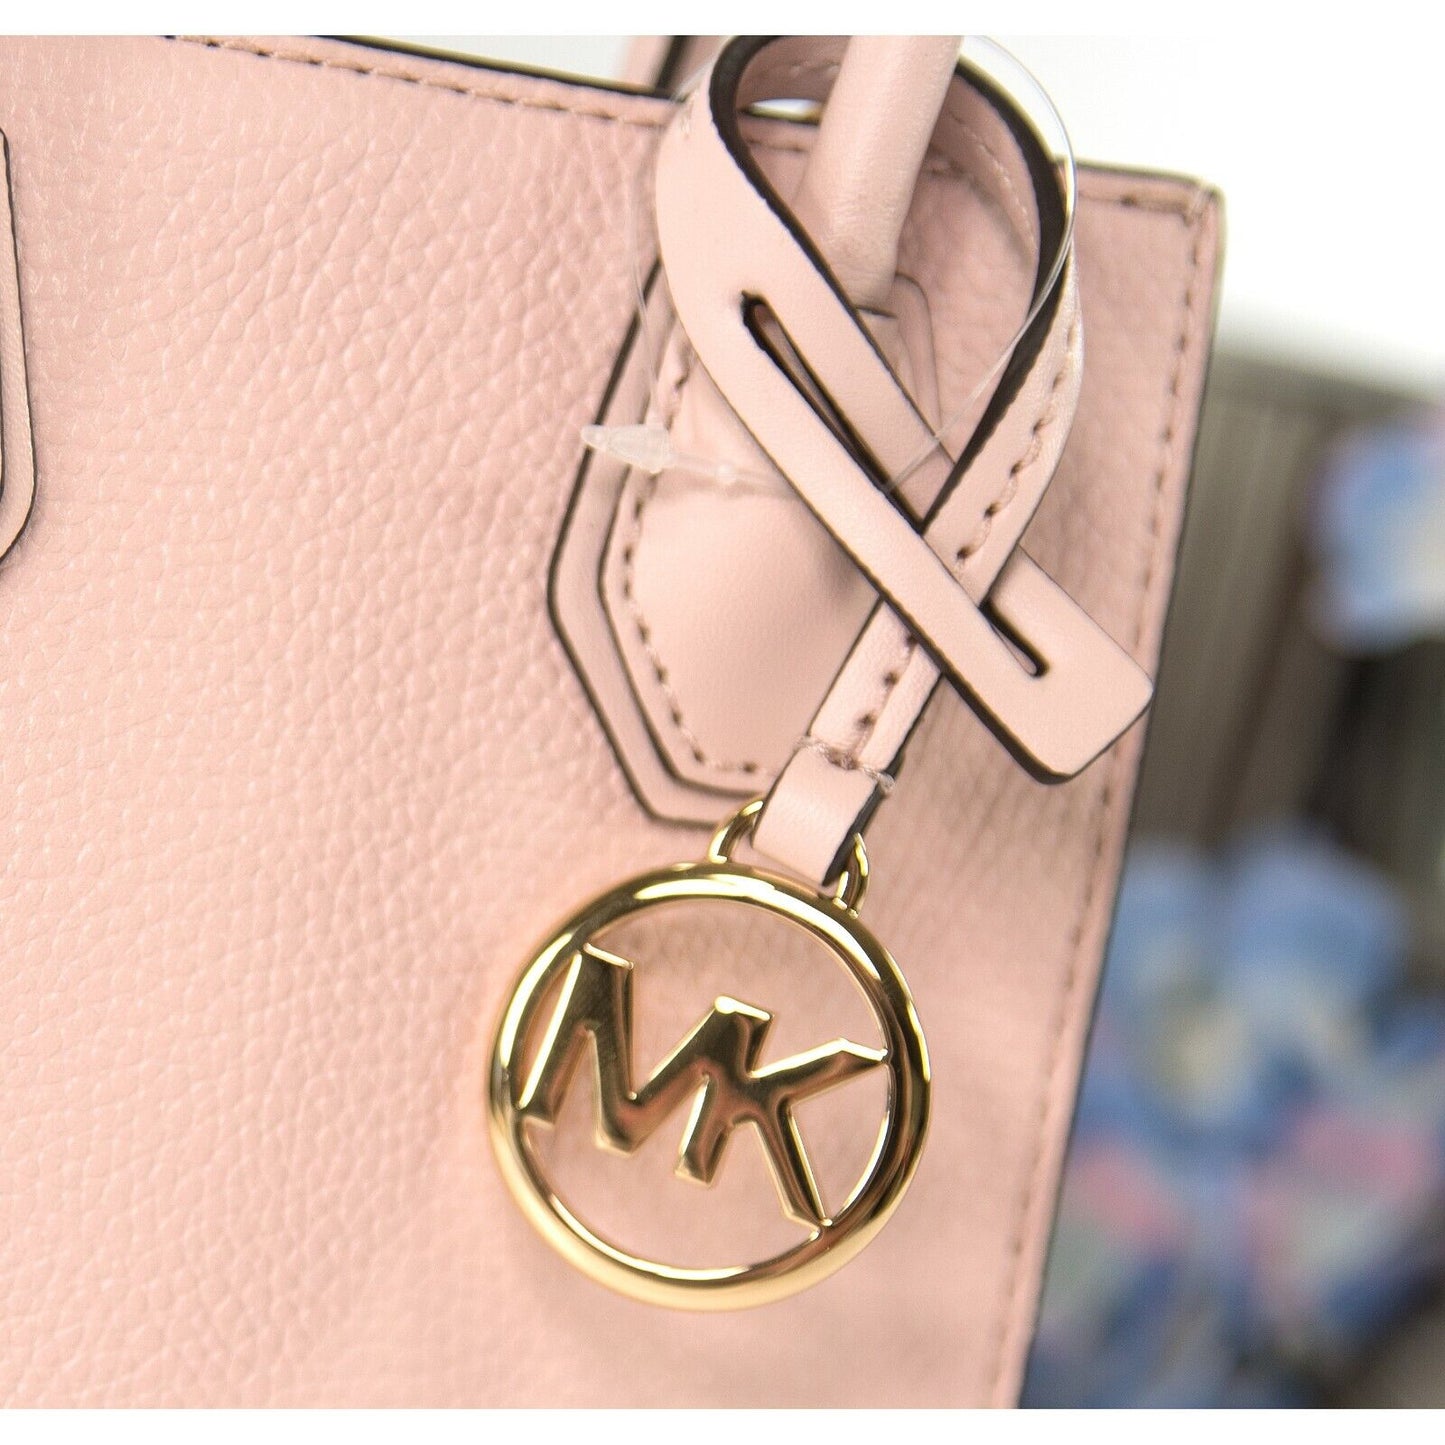 Michael Kors Powder Pink Leather Mercer XS Extra Small Convertible Crossbody NWT